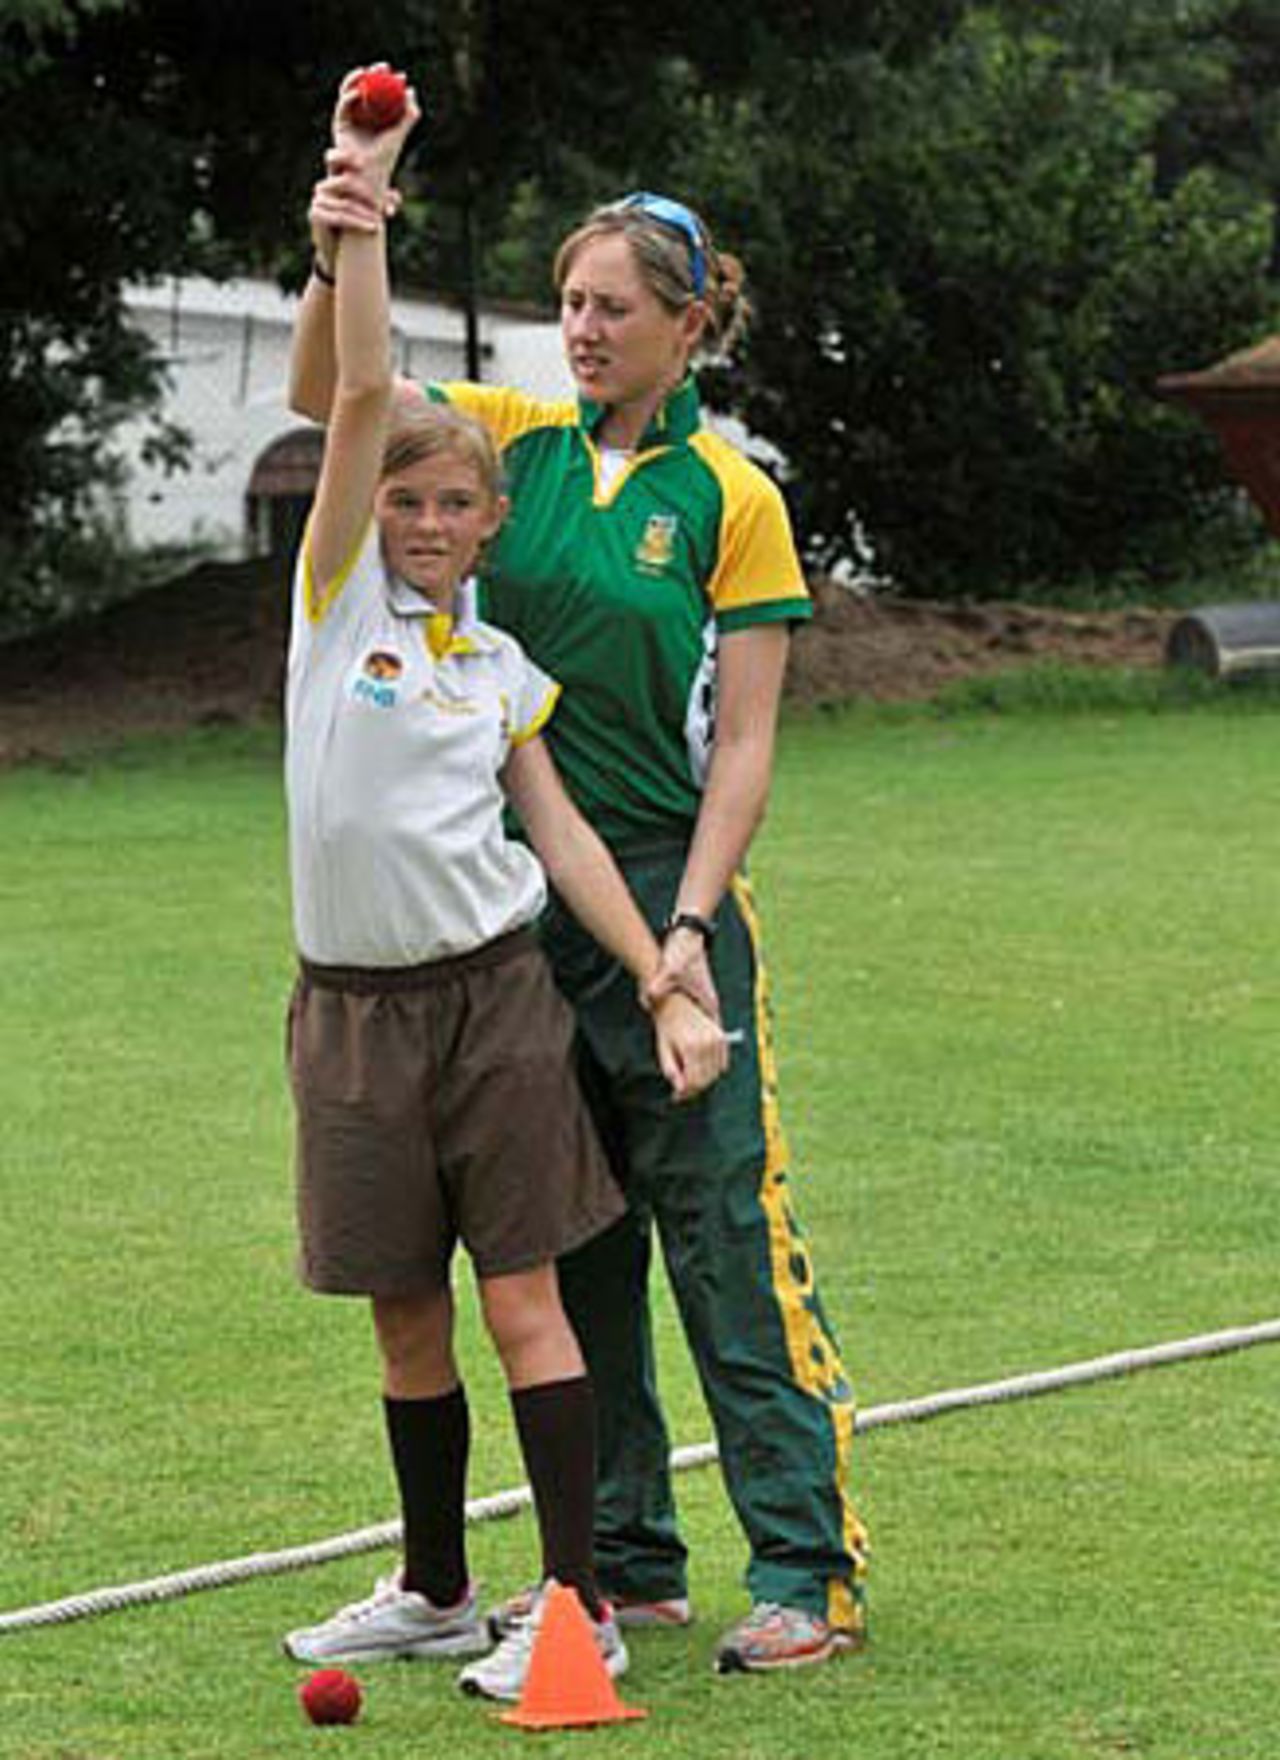 Cri-zelda Brits teaches a school girl how to bowl, Johannesburg